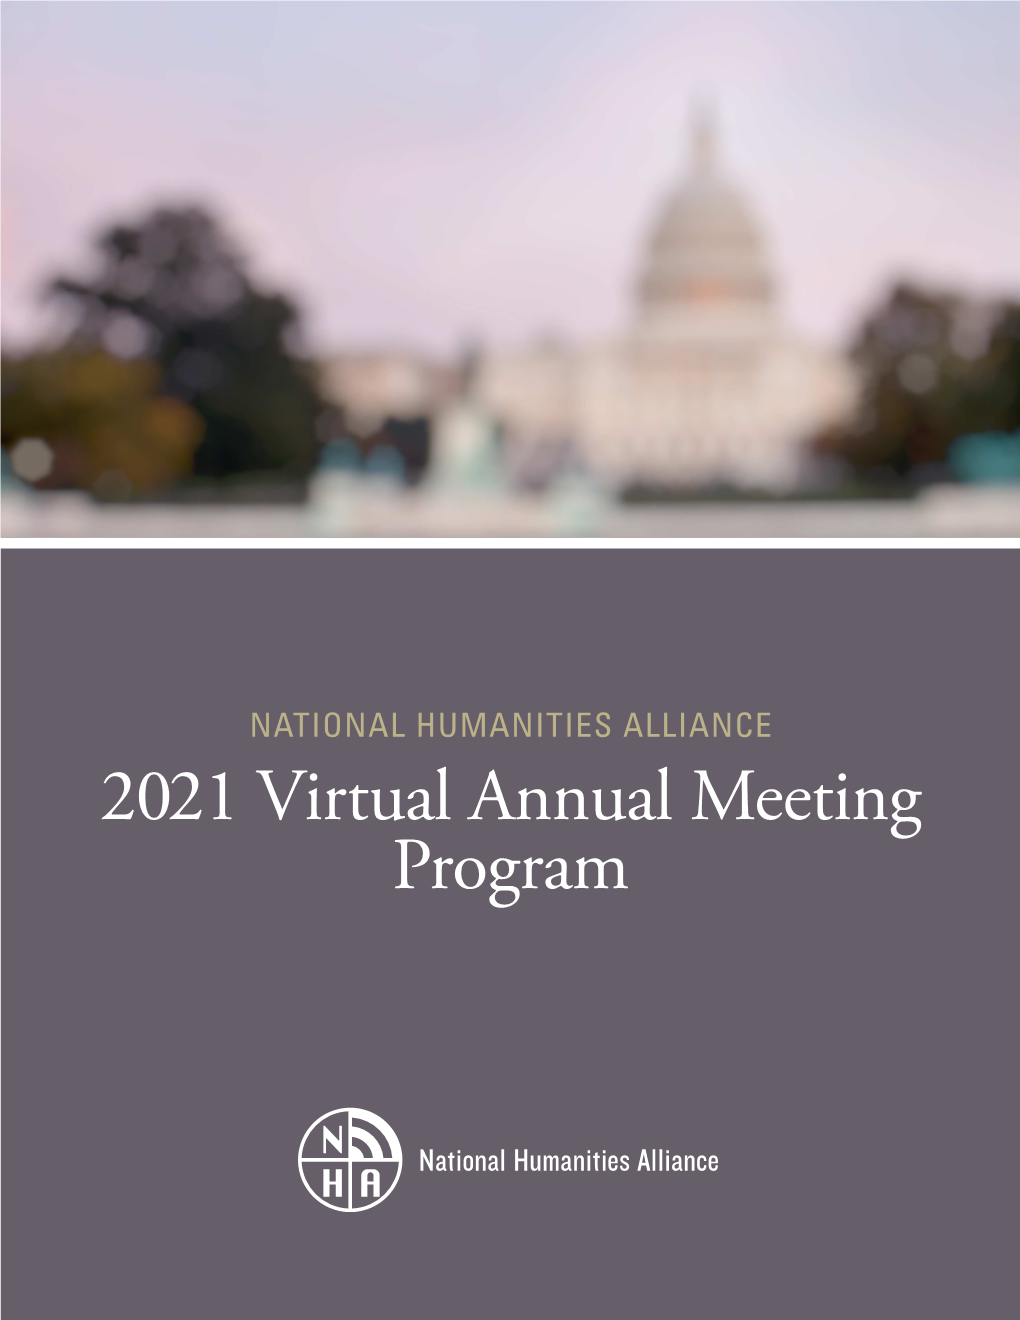 2021 Virtual Annual Meeting Program Meeting Program